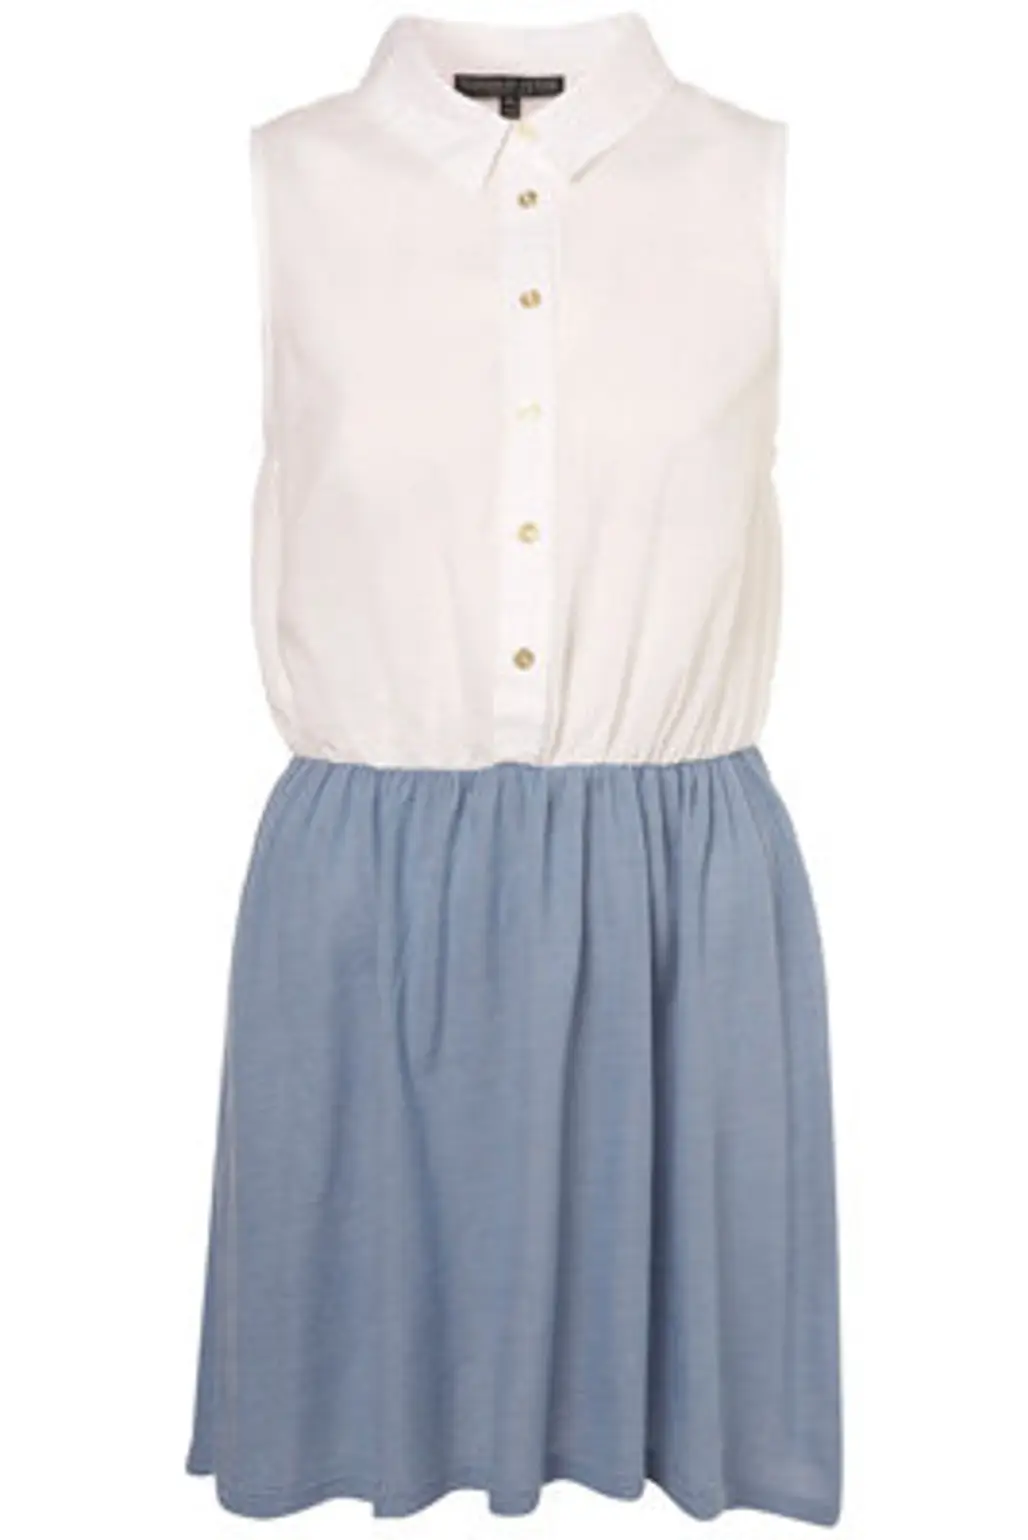 Topshop Petite White Sleeveless Shirt Dress